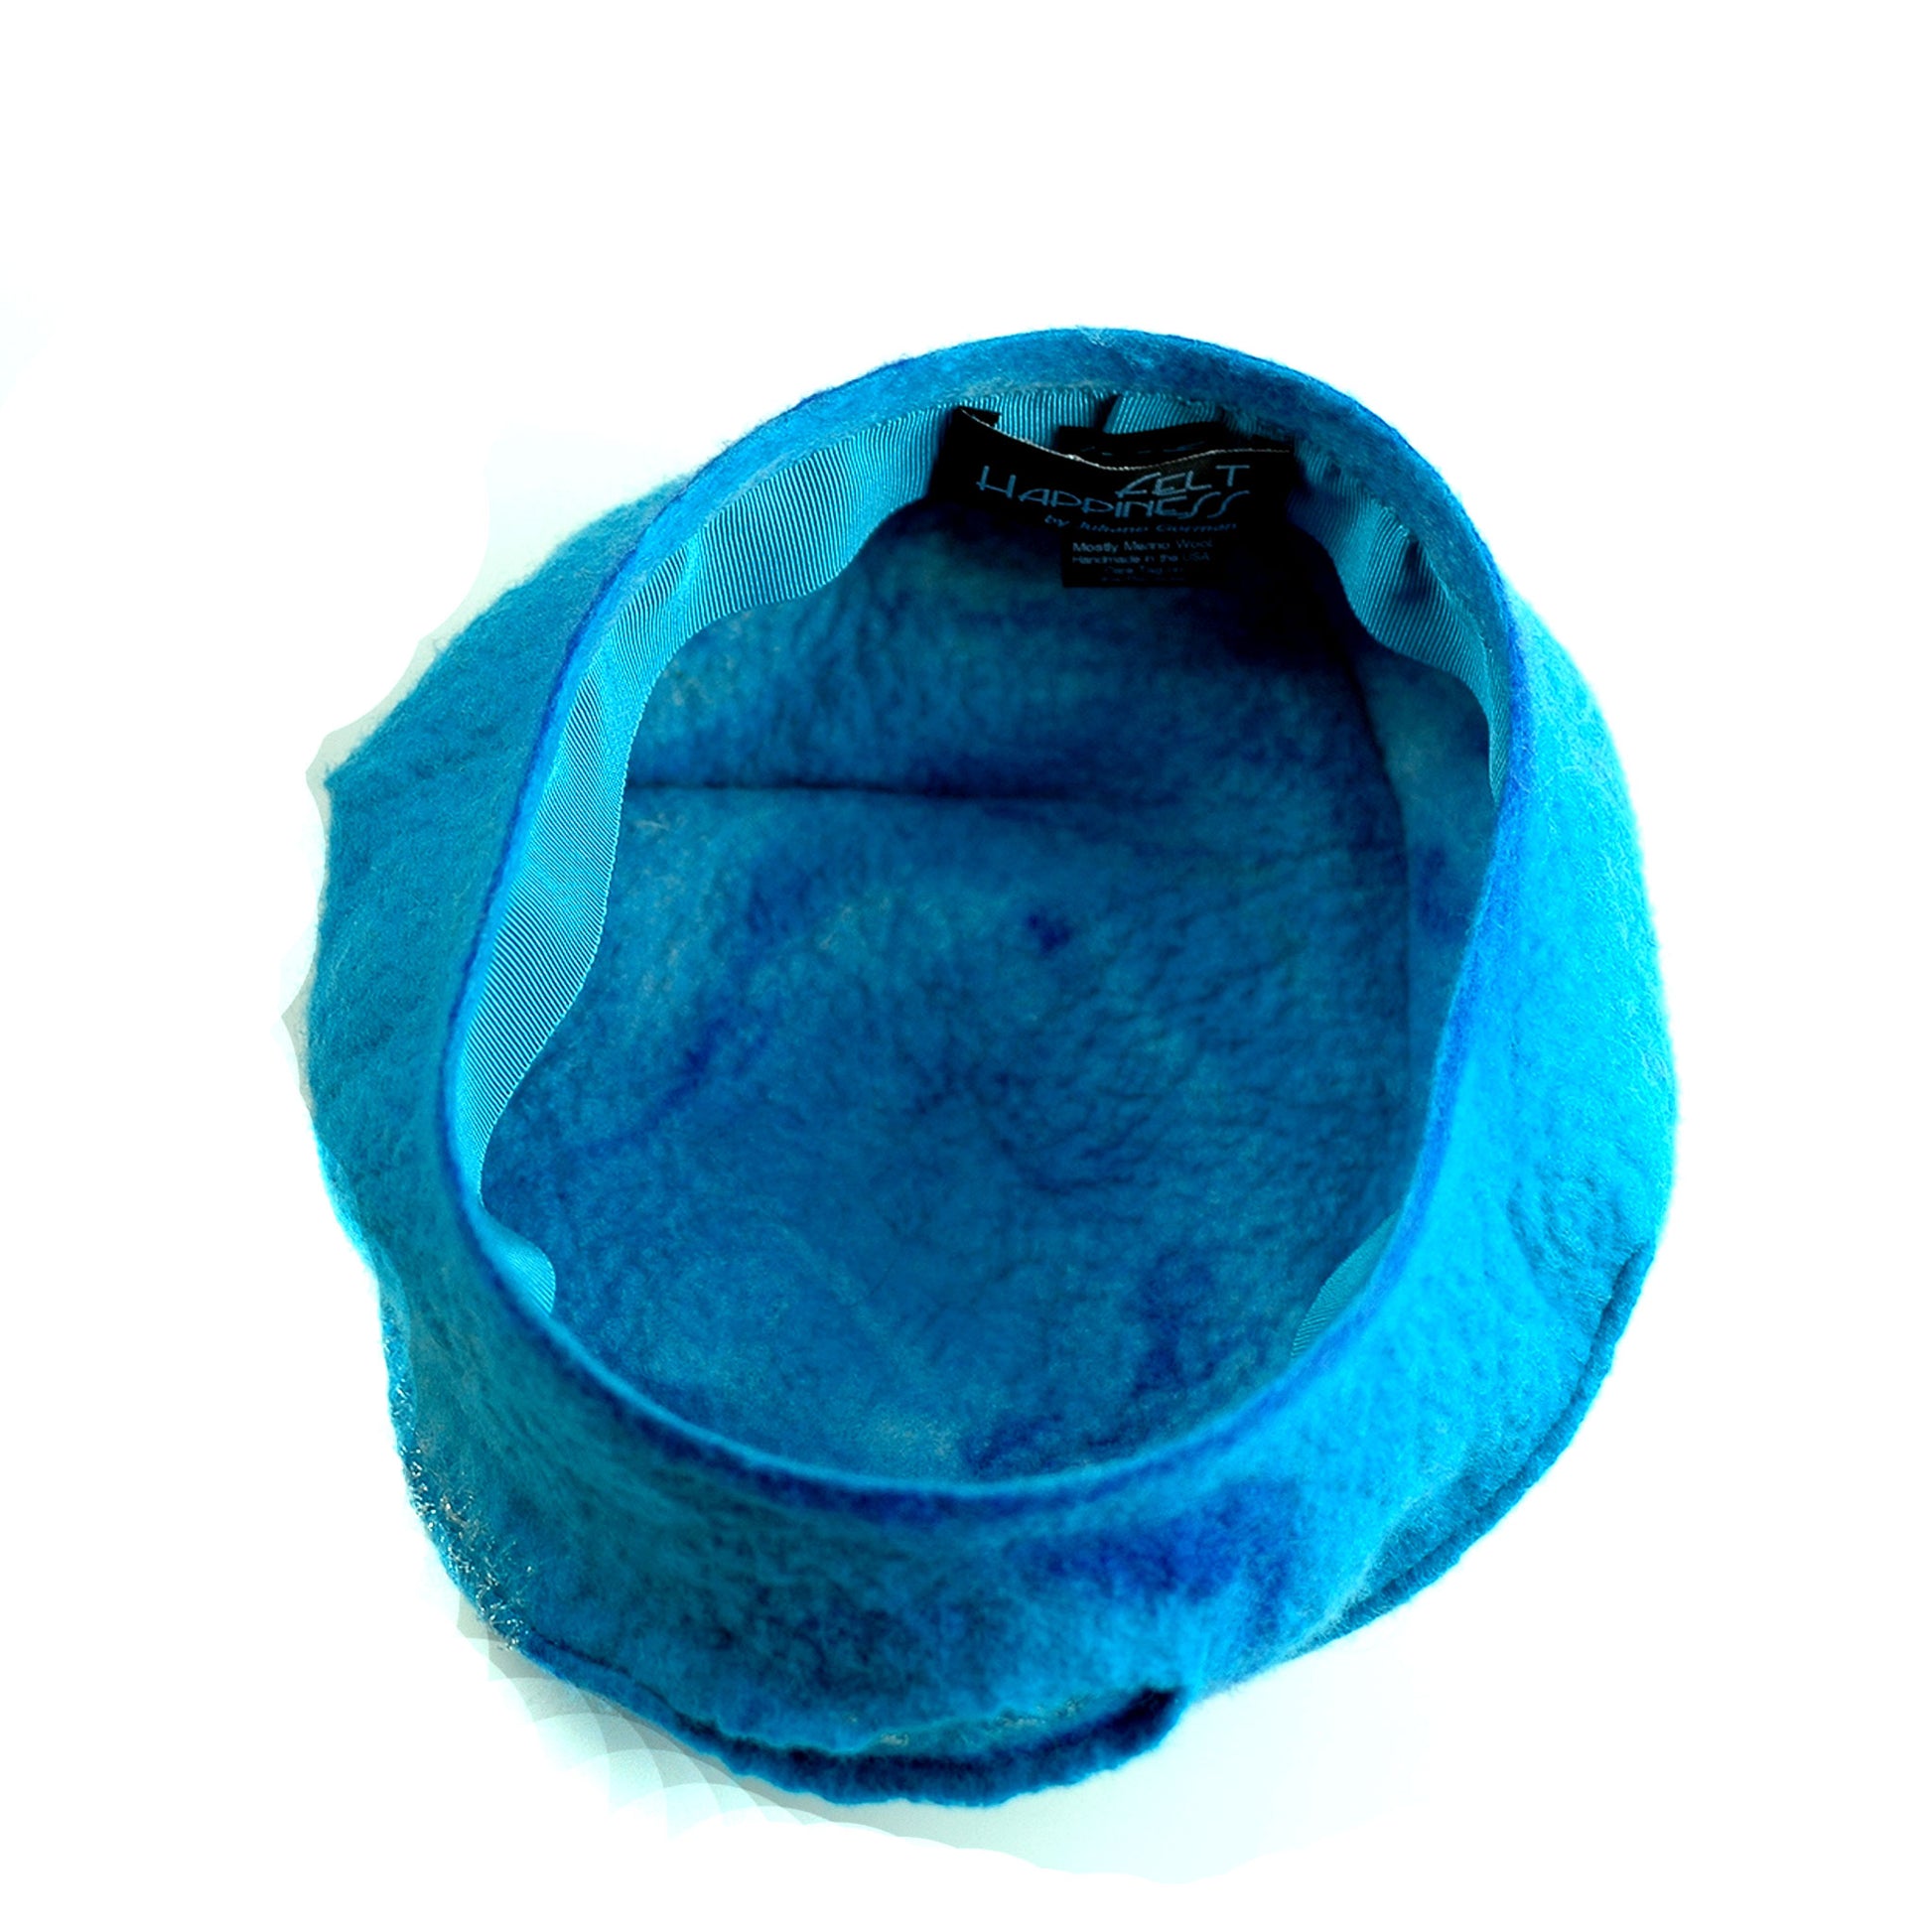 Turquoise Blue Beret with Concentric Circles / Fibonacci Rose on Top - interior